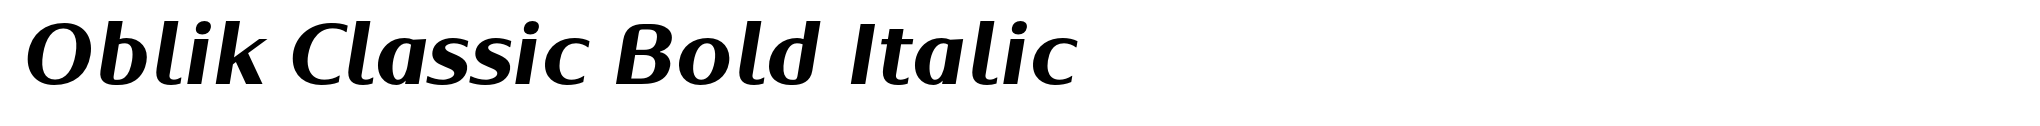 Oblik Classic Bold Italic image